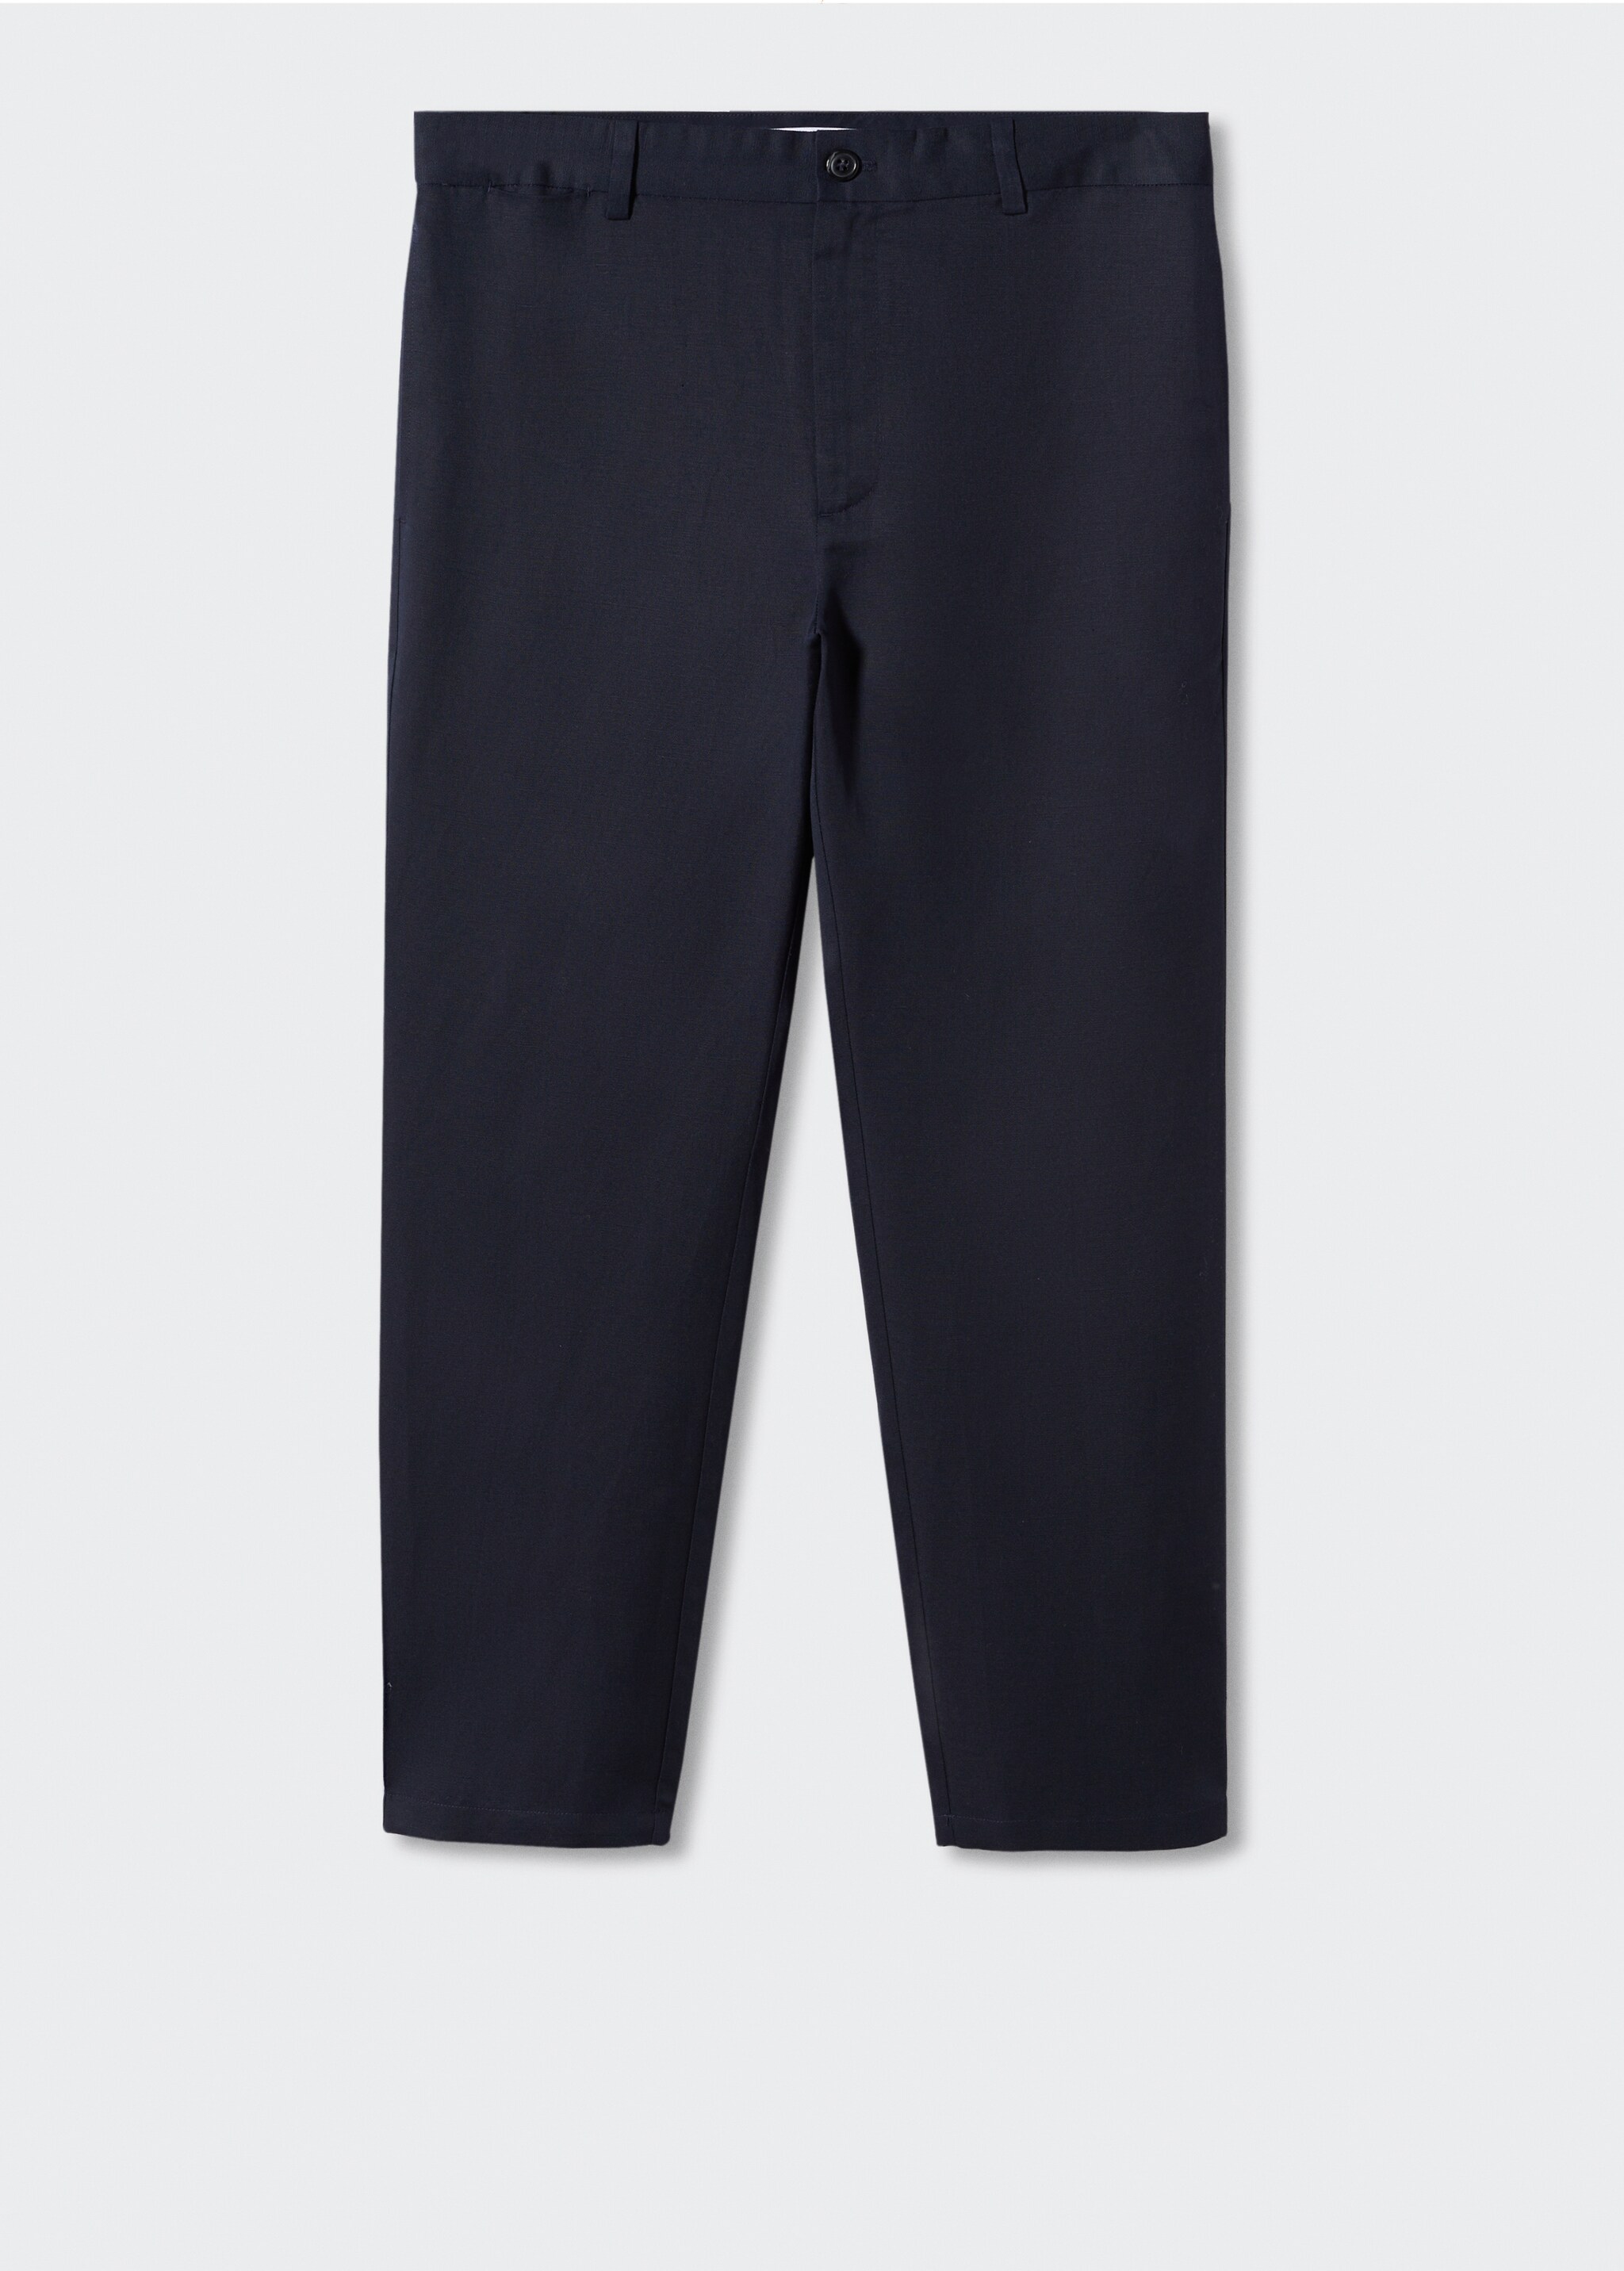 Pantalons slim fit lyocell lli  - Article sense model